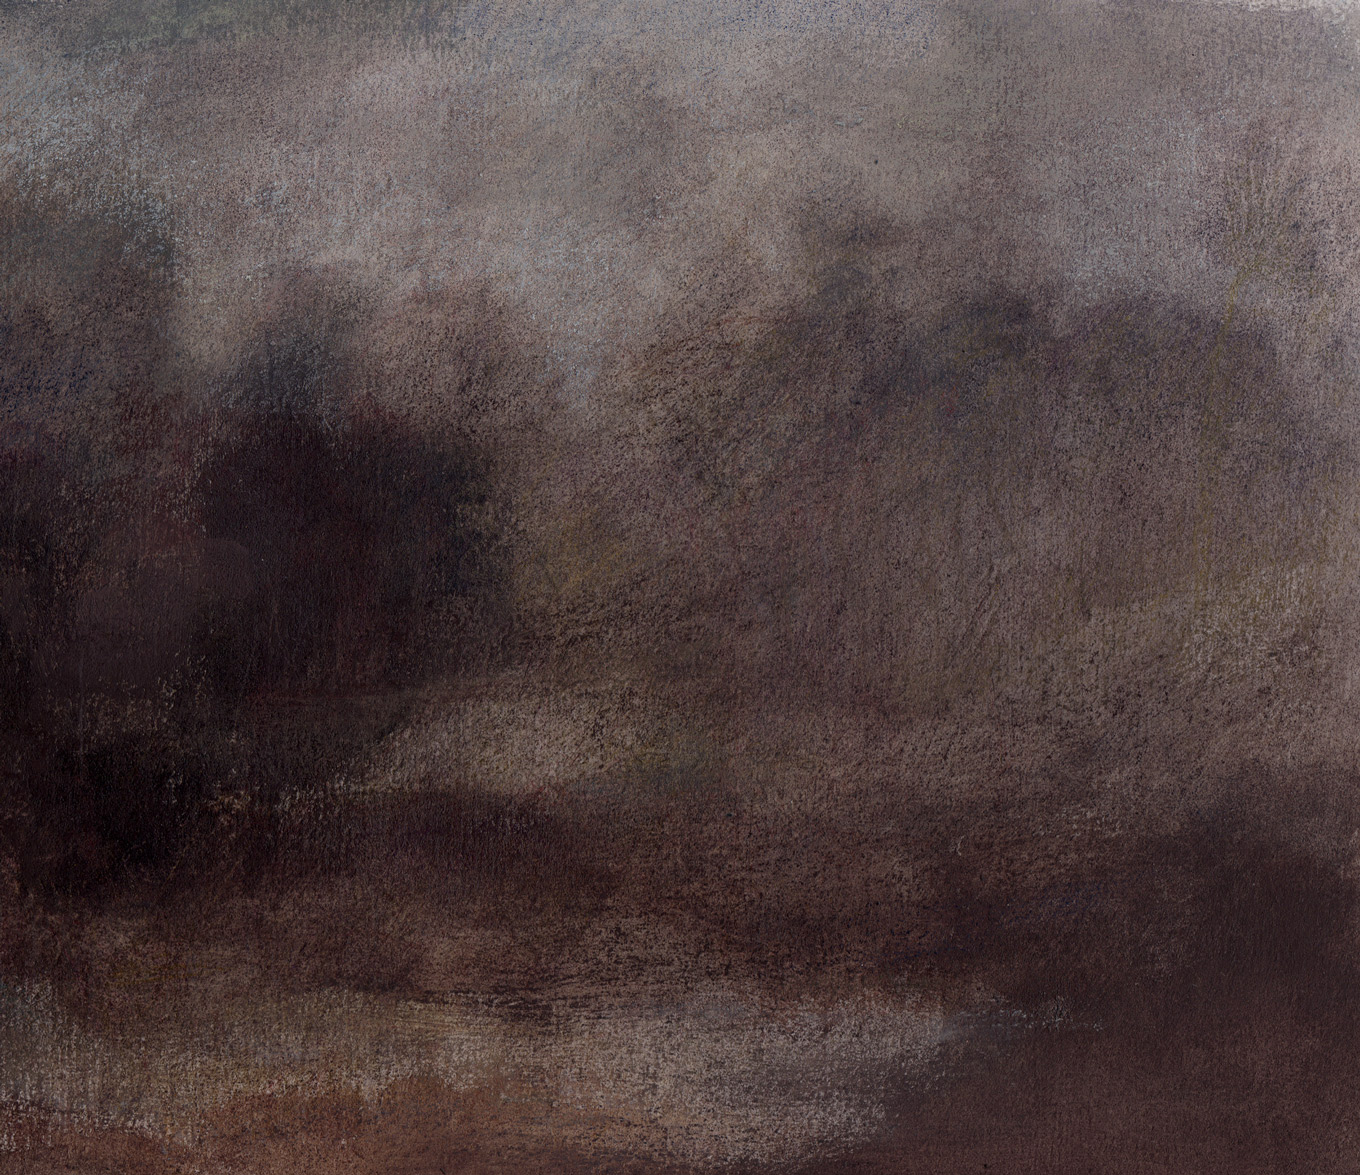 L1212 - Nicholas Herbert, British Artist, mixed media landscape painting of Chobham Common, mixed media on paper,2020